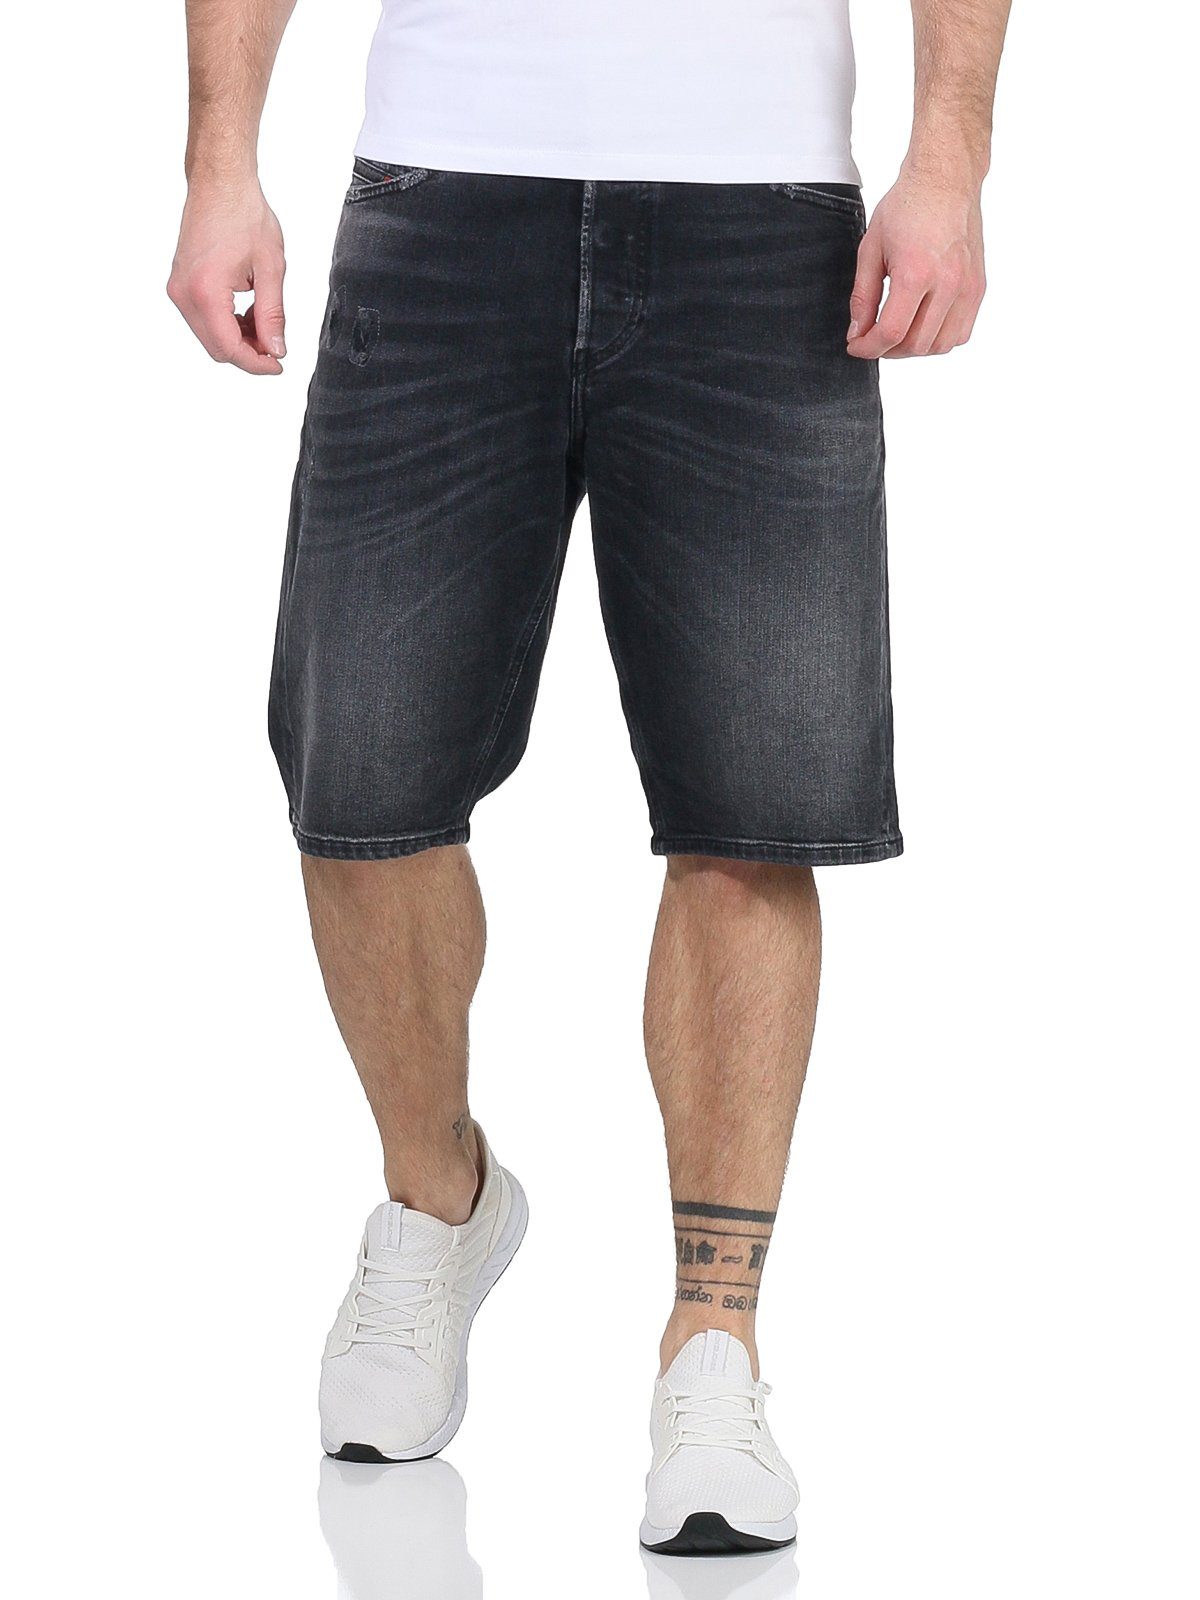 dezenter Used-Look RG48R Diesel Jeans Shorts R930L Anthrazit Herren Jeansshorts Kroshort Shorts, kurze Hose